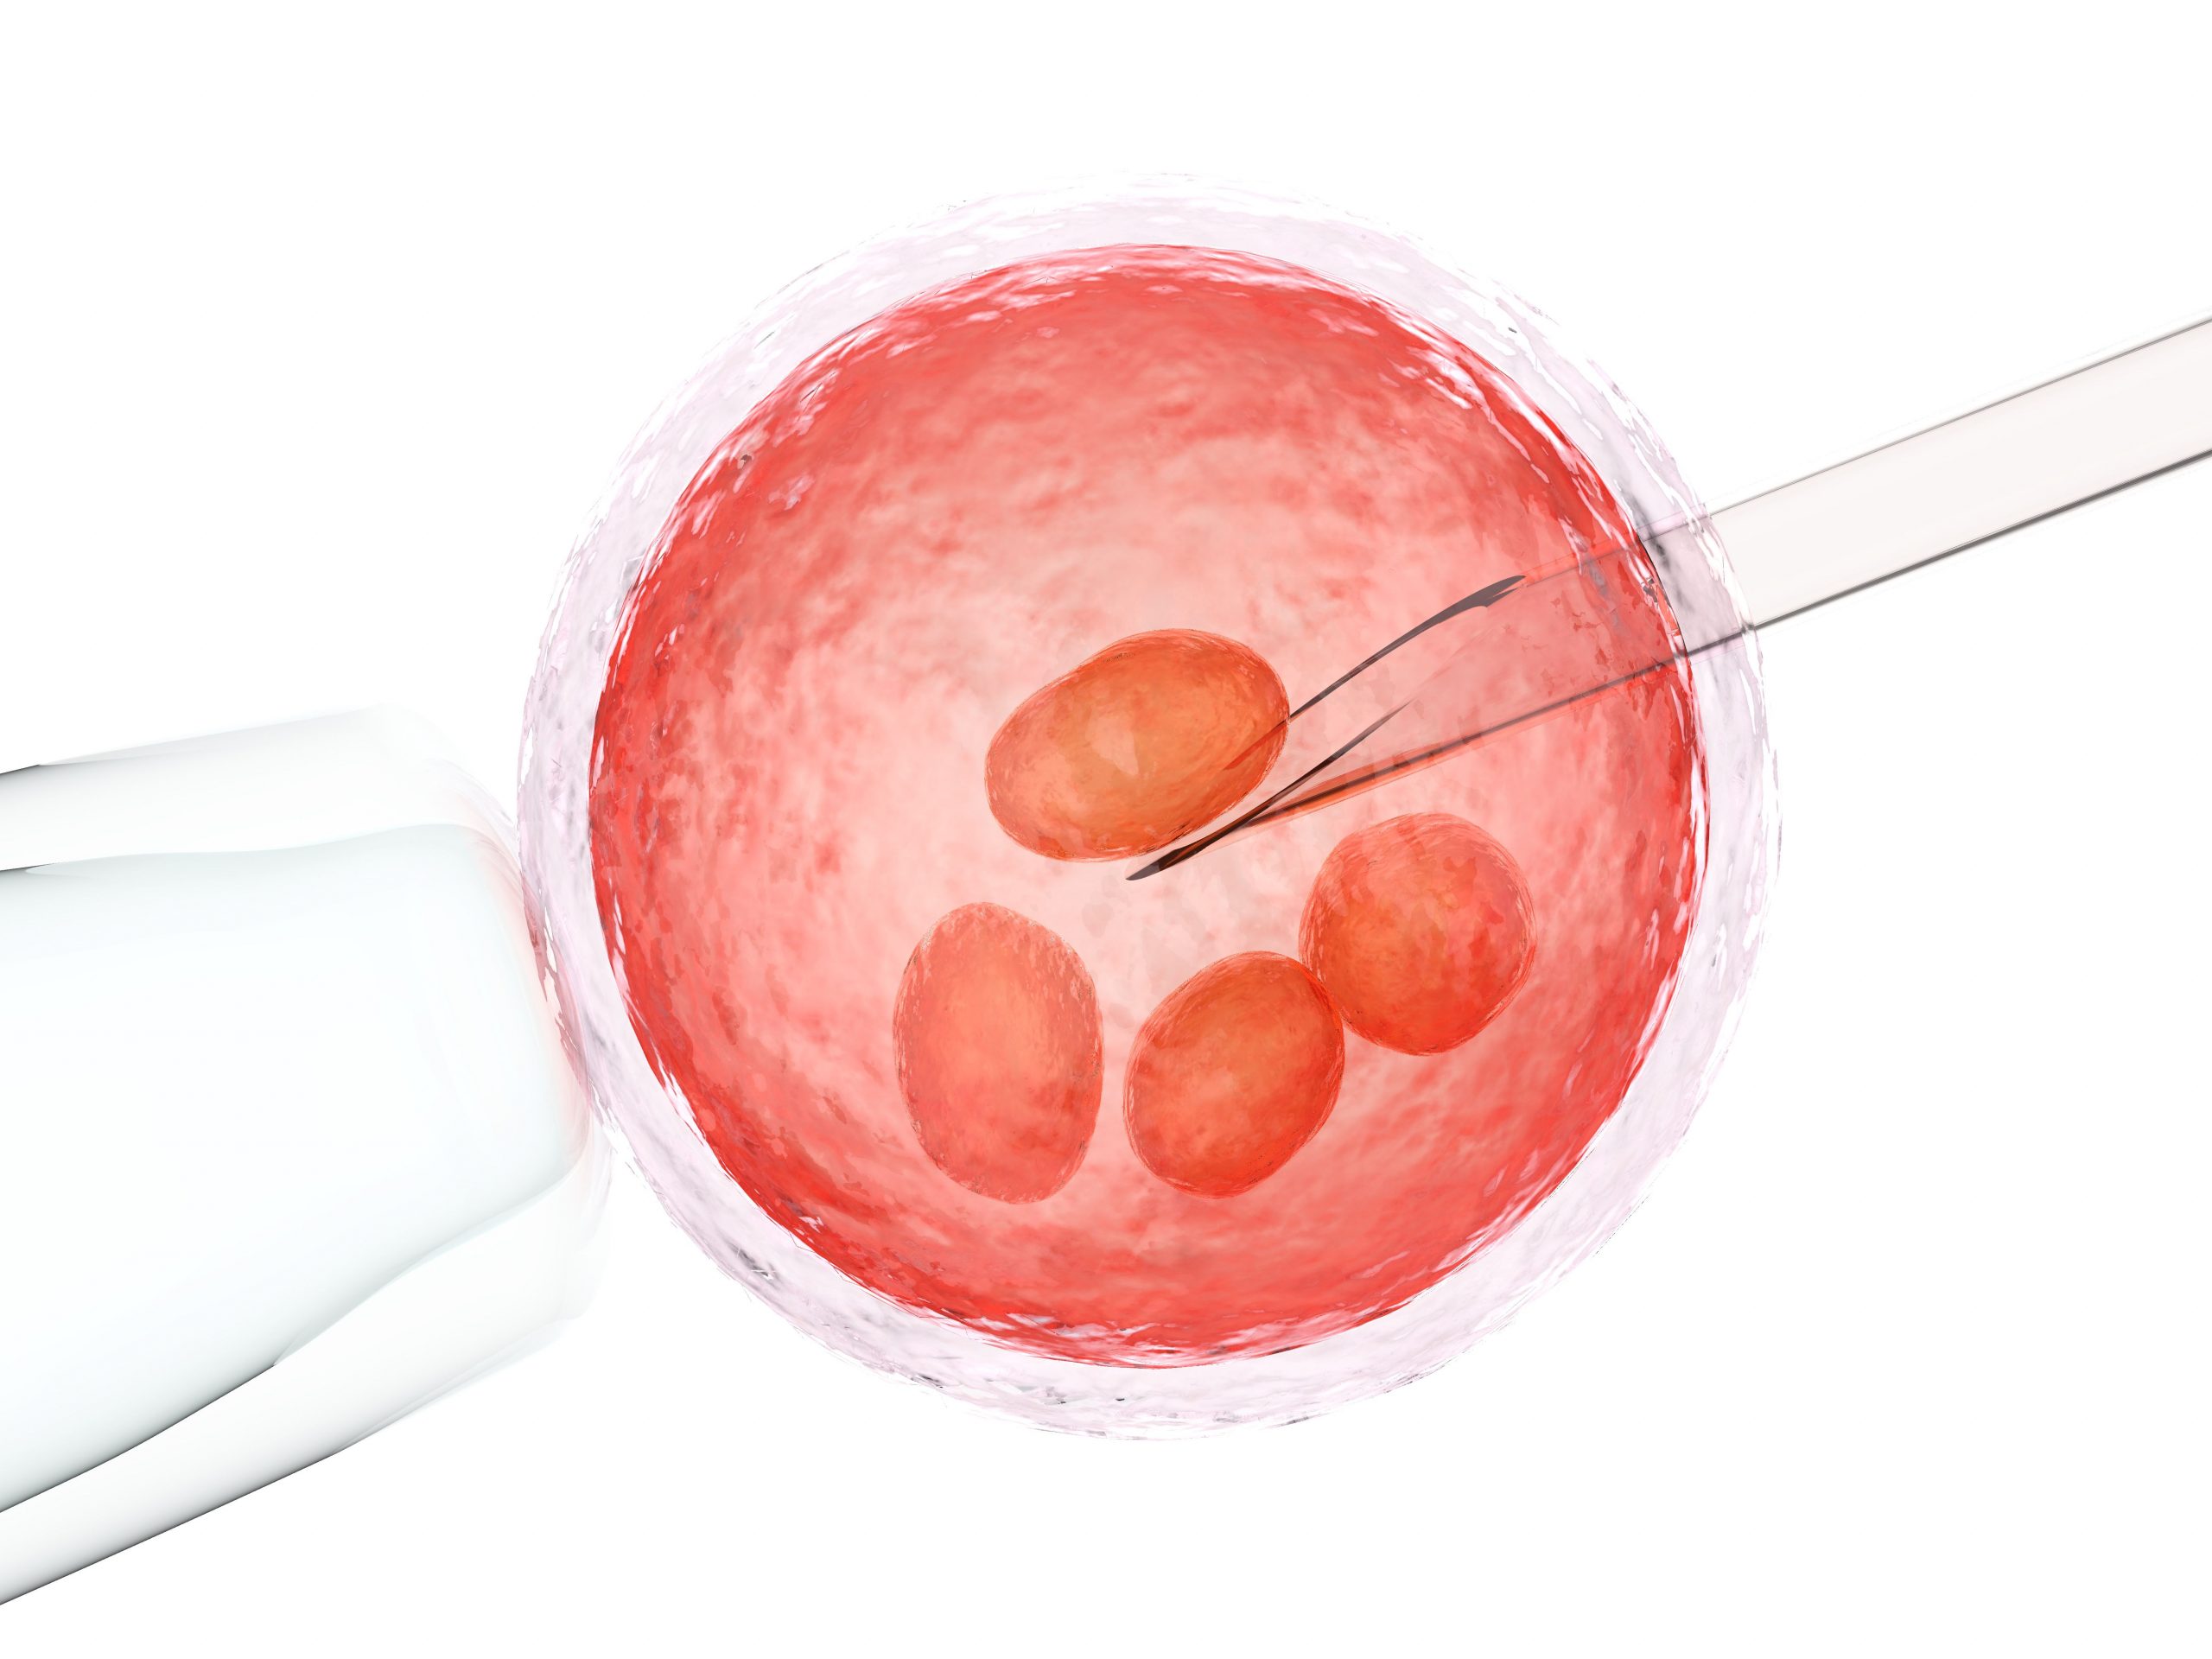 Pobranie komórki jajowej do in vitro krok po kroku